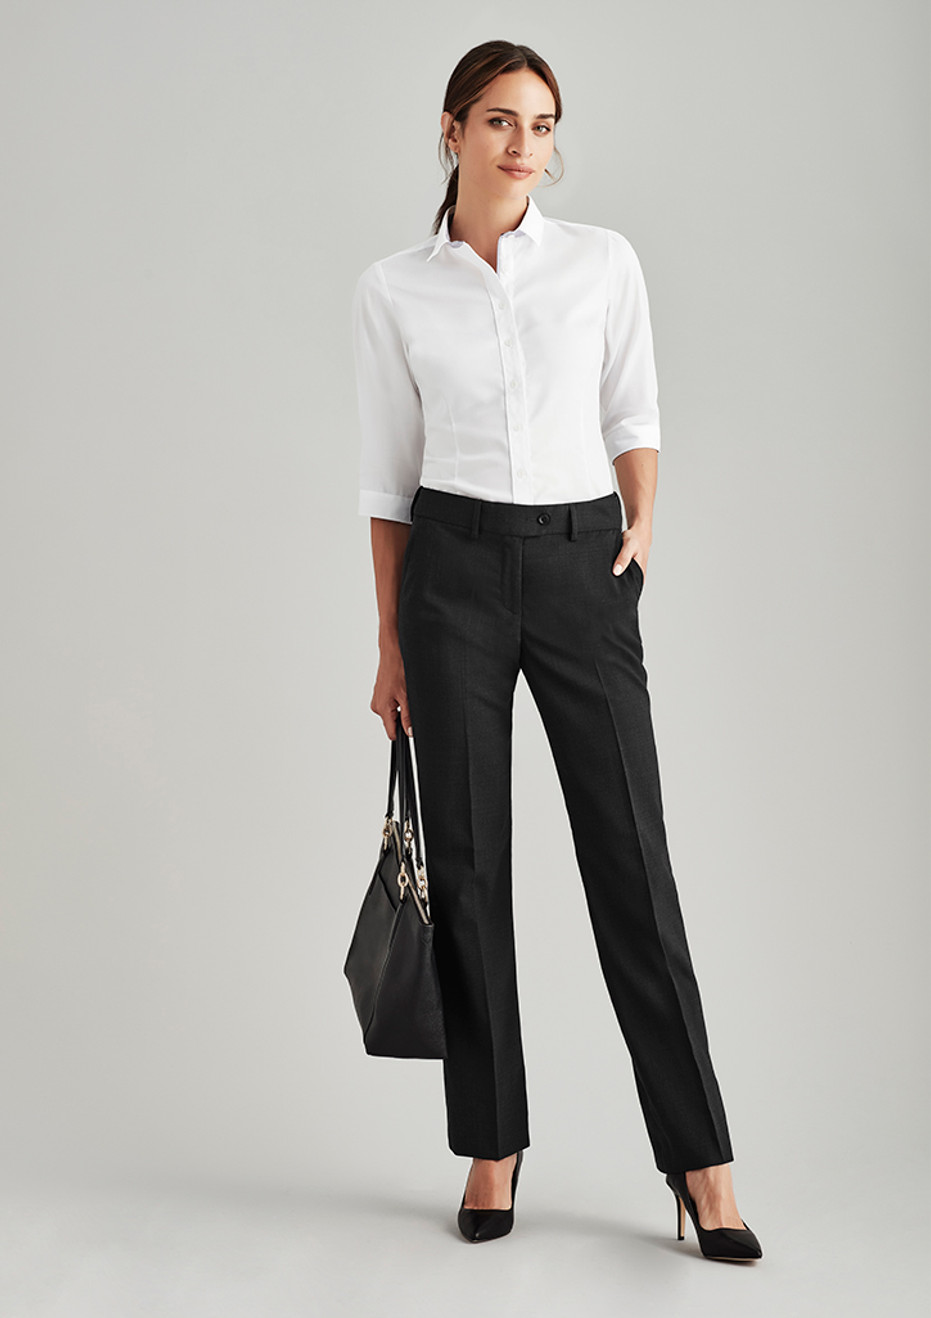 Biz Corporates 14015 Womens Adjustable Waist Pant | Available Colours: Black, Navy, Charcoal